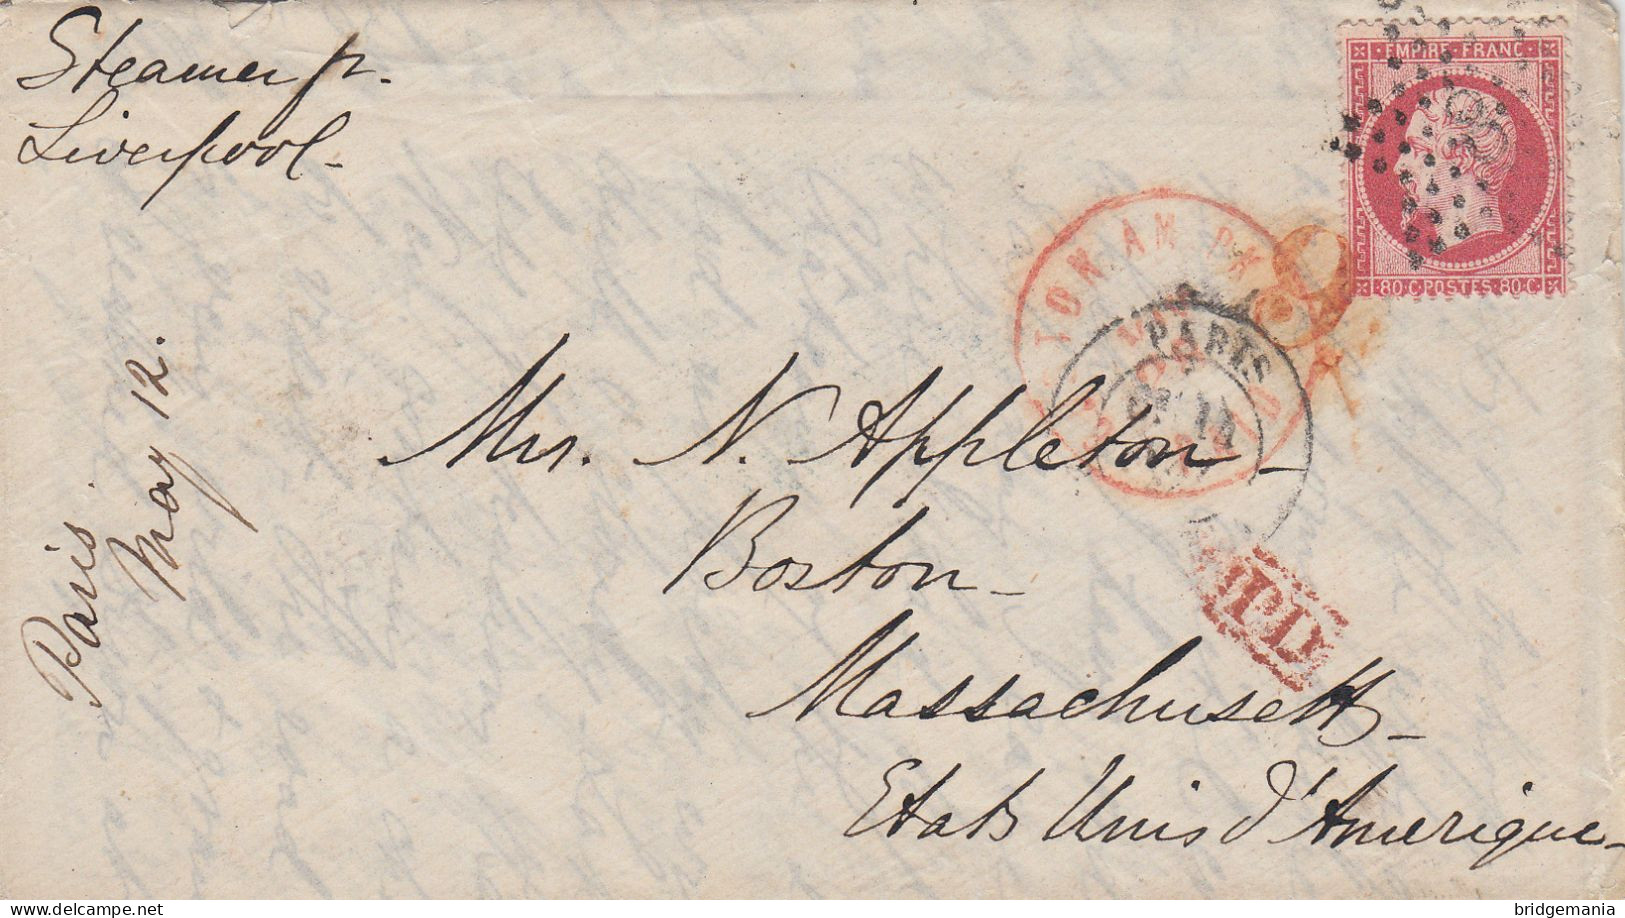 MTM141 - 1867 TRANSATLANTIC LETTER FRANCE TO USA Steamer CITY OF BOSTON THE INMAN LINE - PAID - Marcofilia